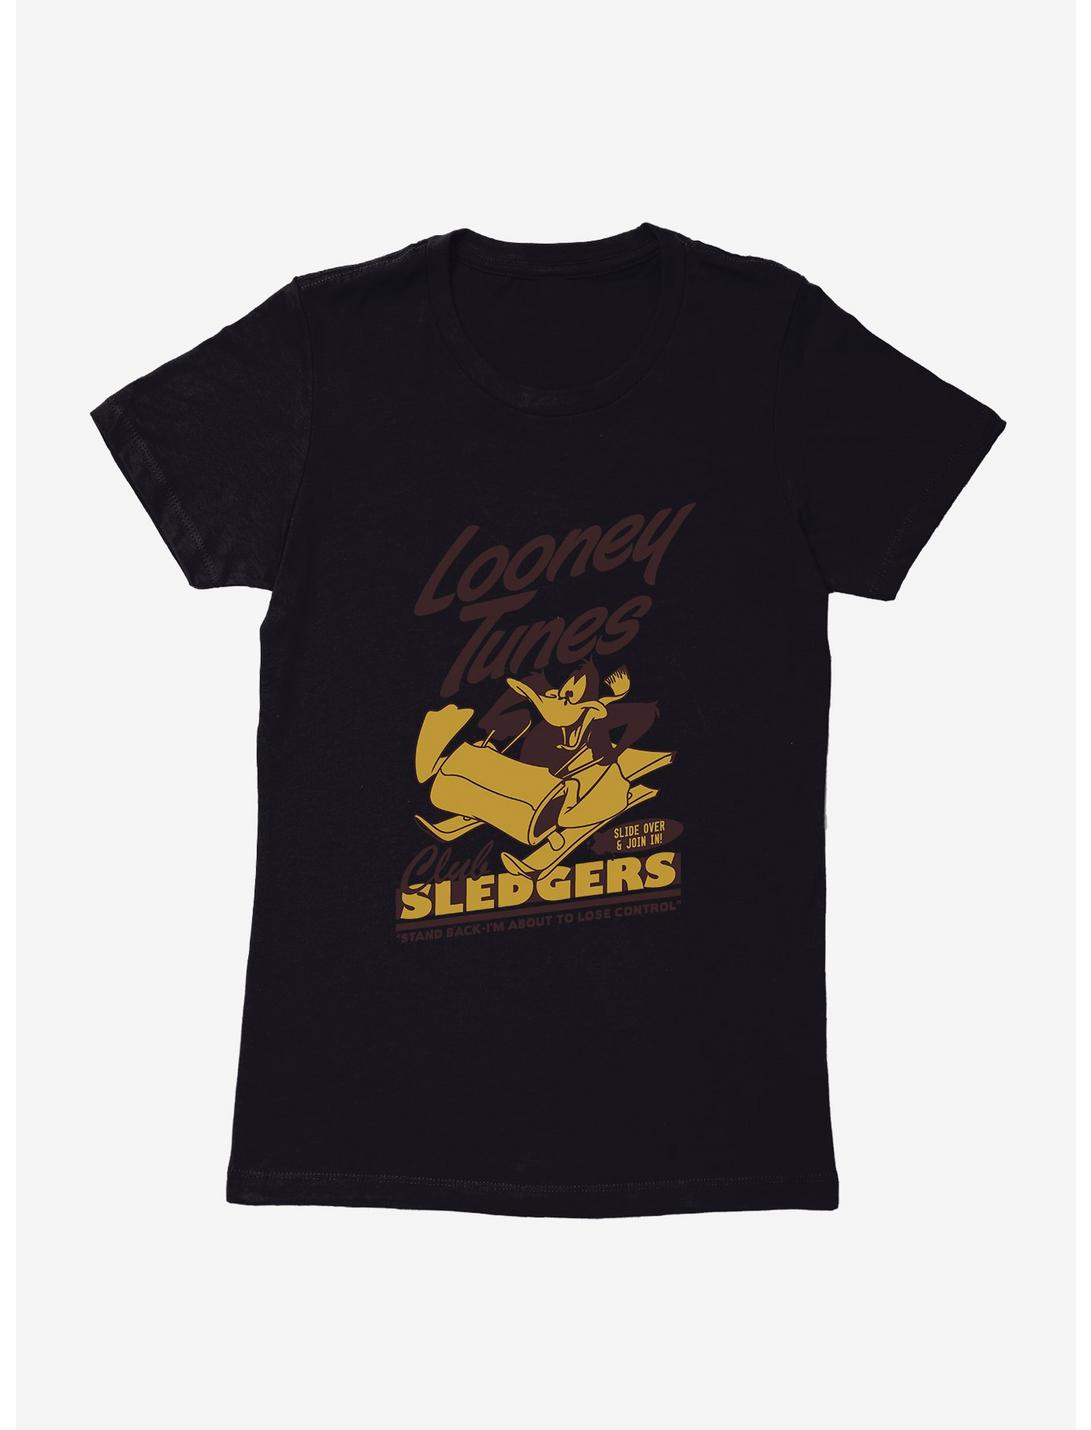 Looney Tunes Club Sledgers Womens T-Shirt, BLACK, hi-res